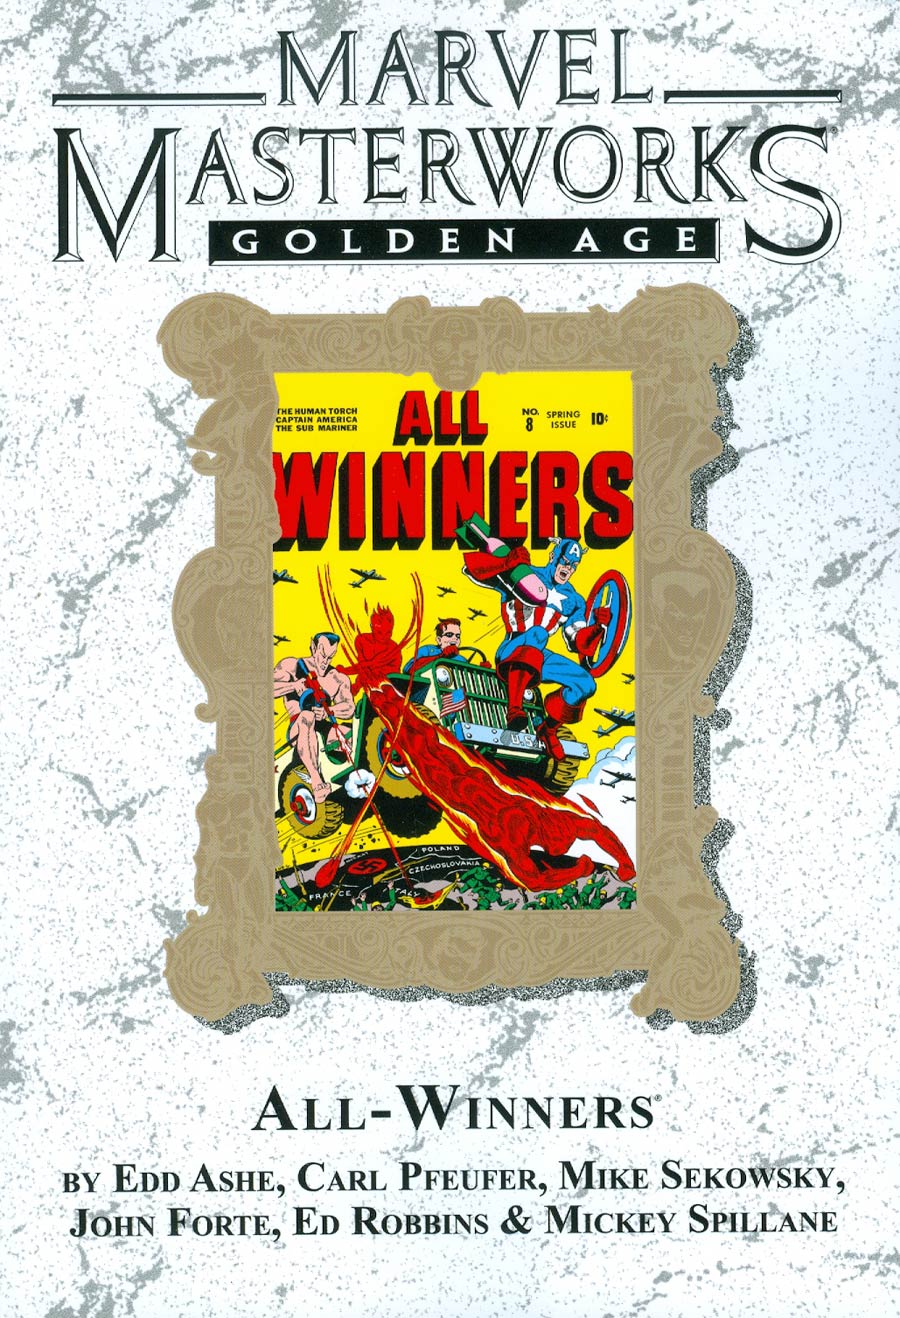 Marvel Masterworks Golden Age All-Winners Vol 2 TP Direct Market Edition